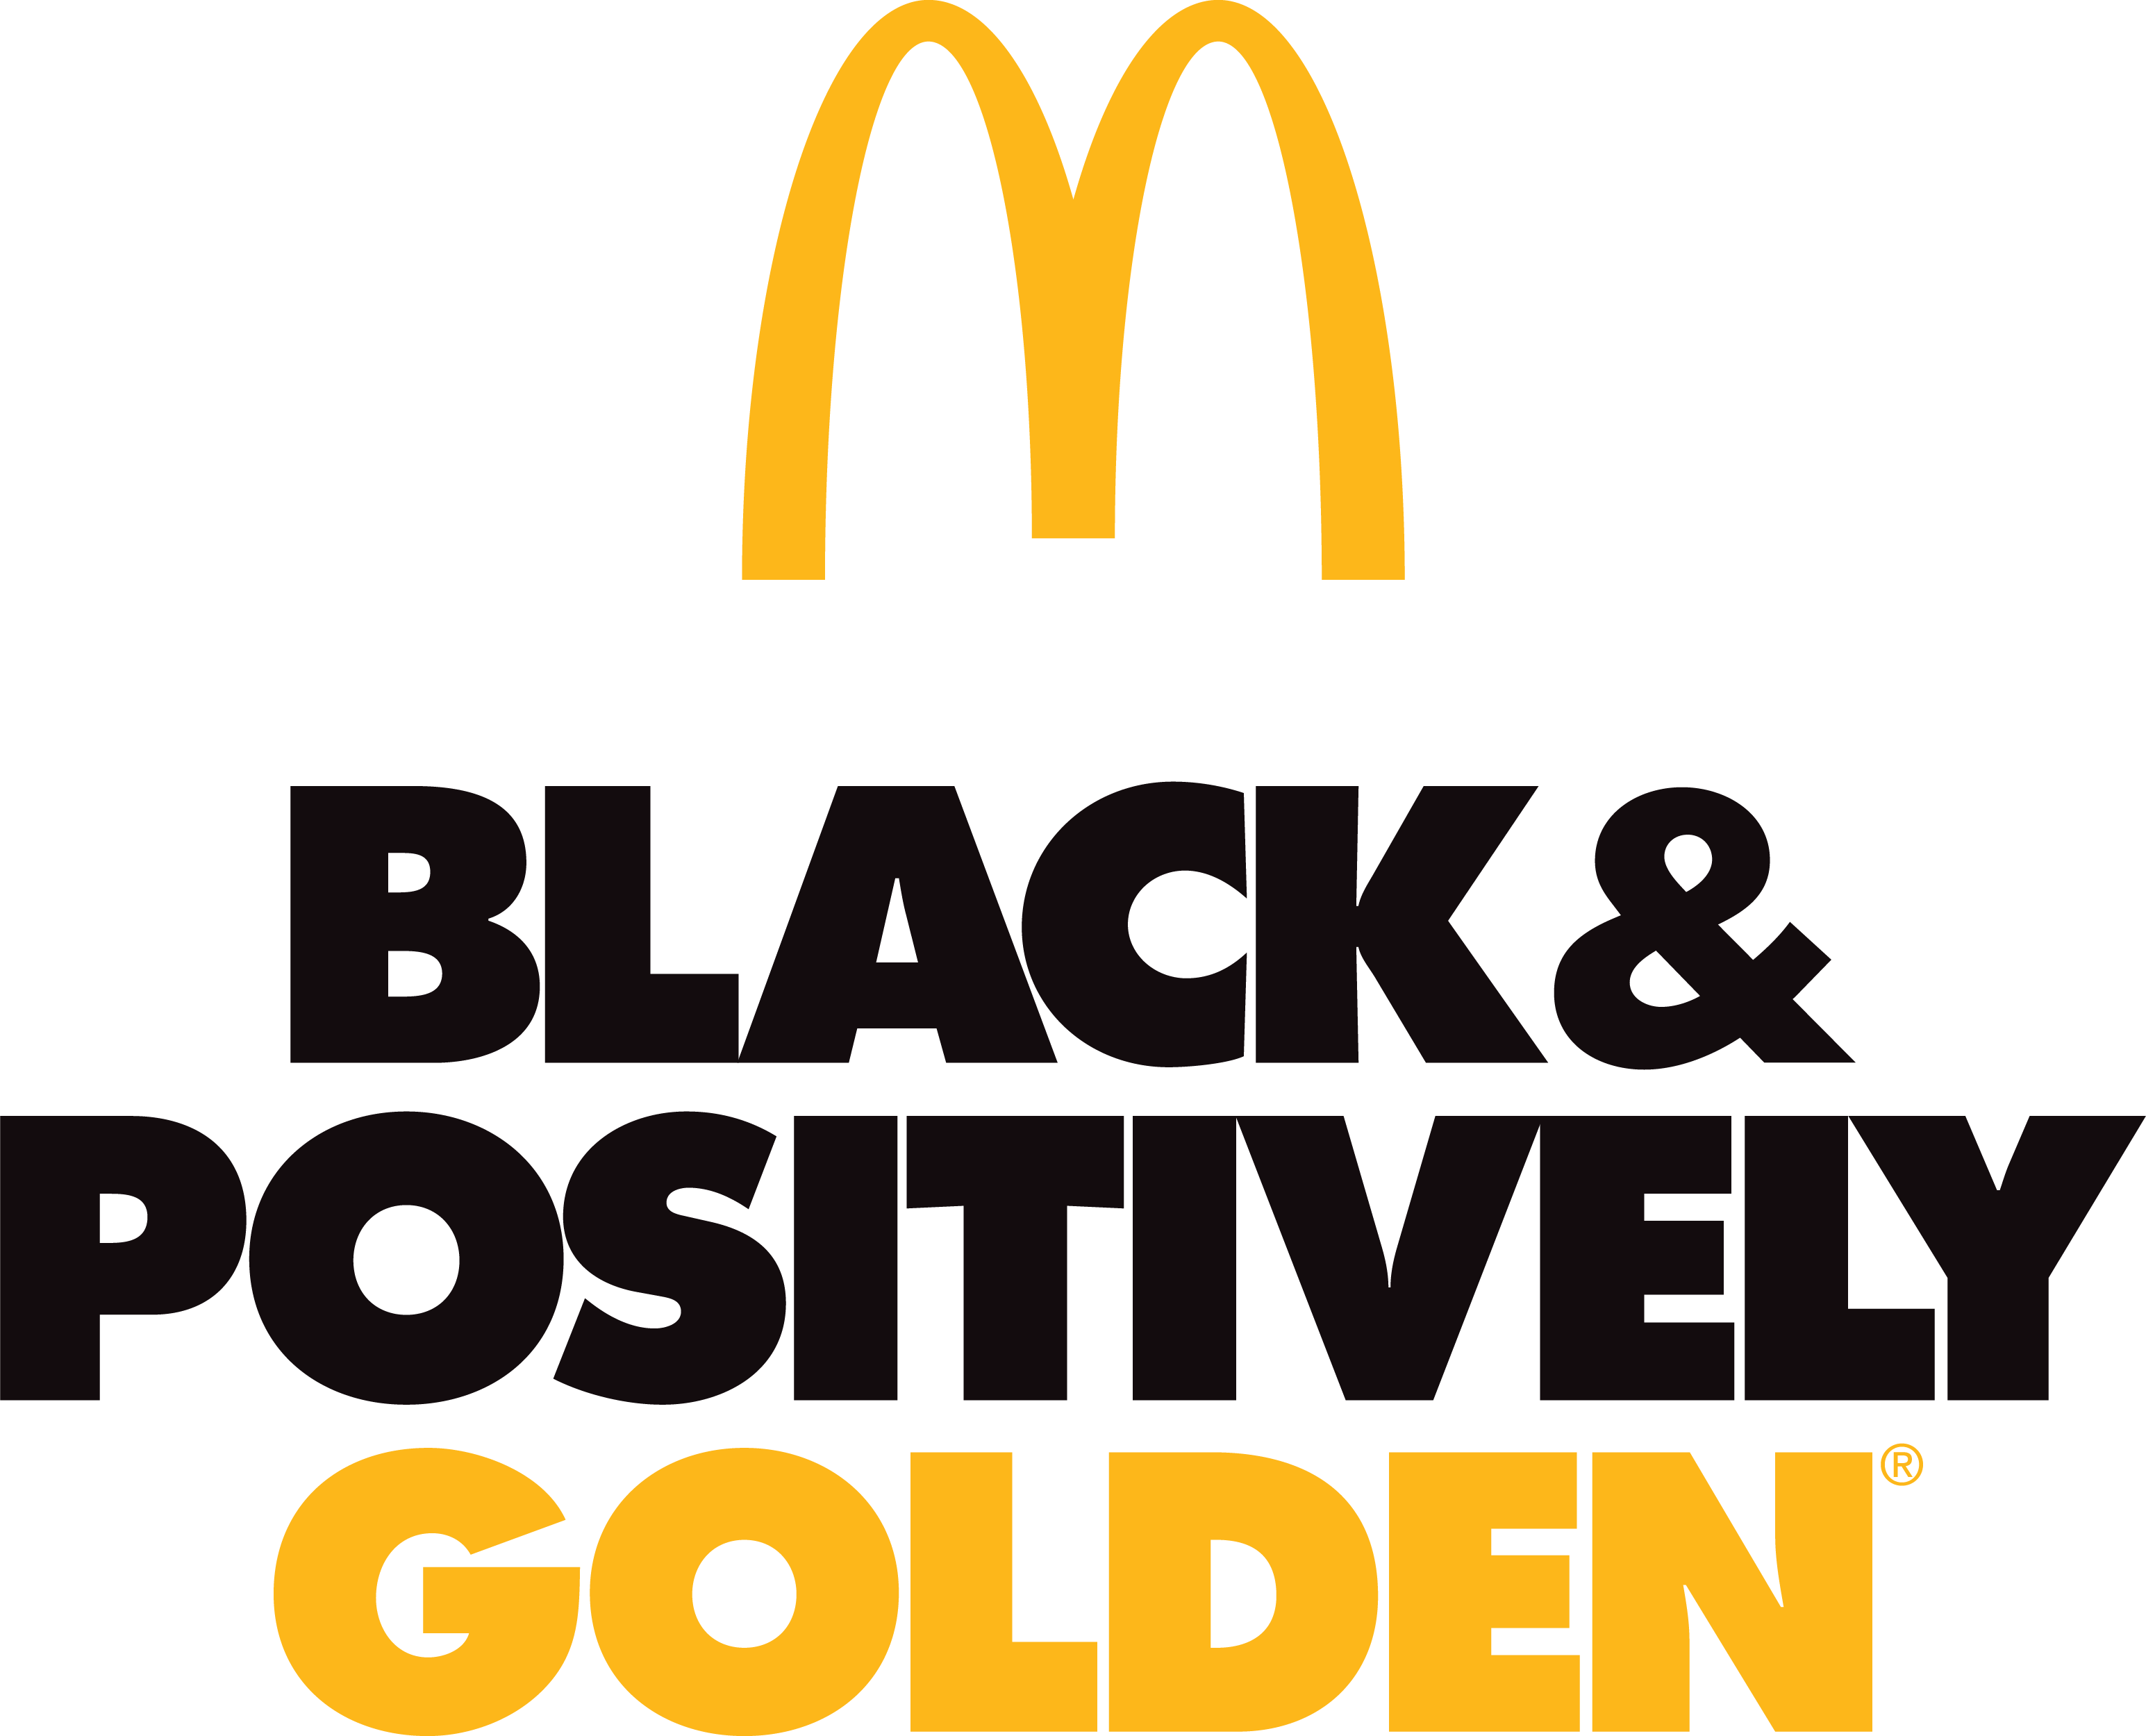 McDonald’s Black & Positively Golden